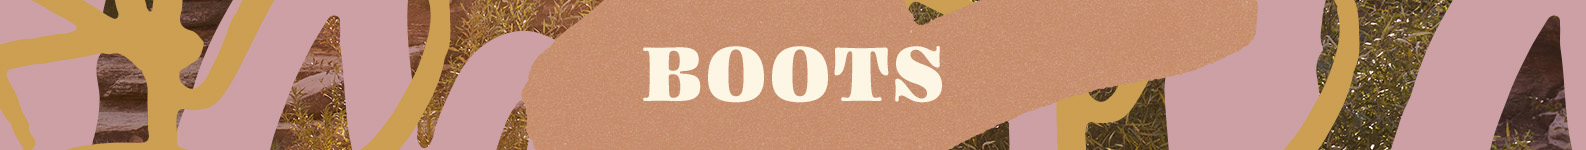 Boots brand header image